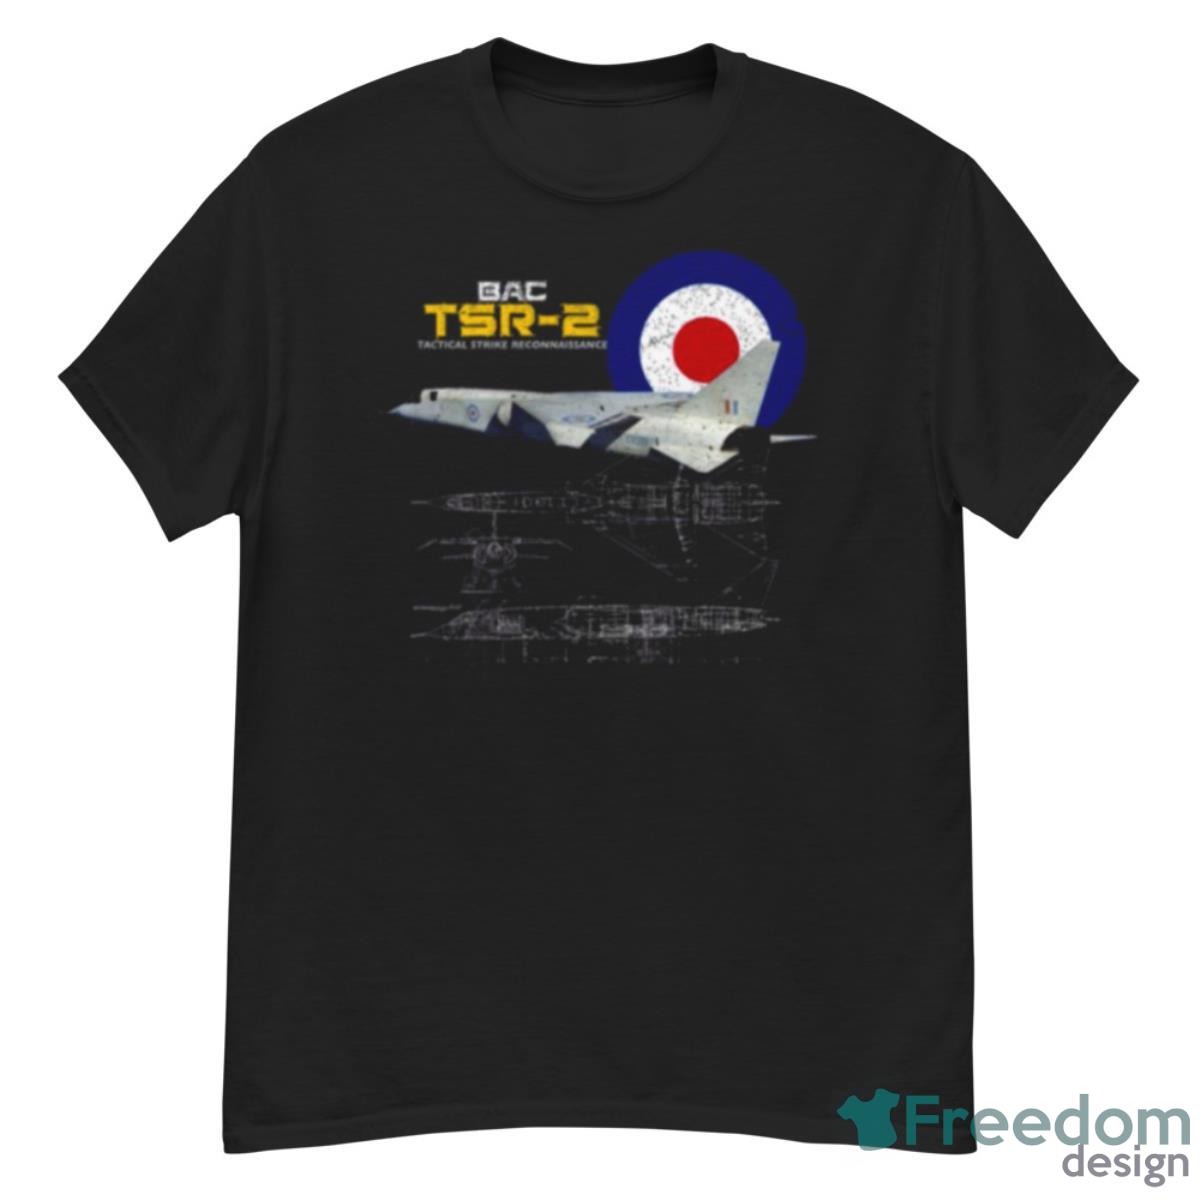 British Bac Tsr 2 Air Force Shirt - G500 Men’s Classic T-Shirt